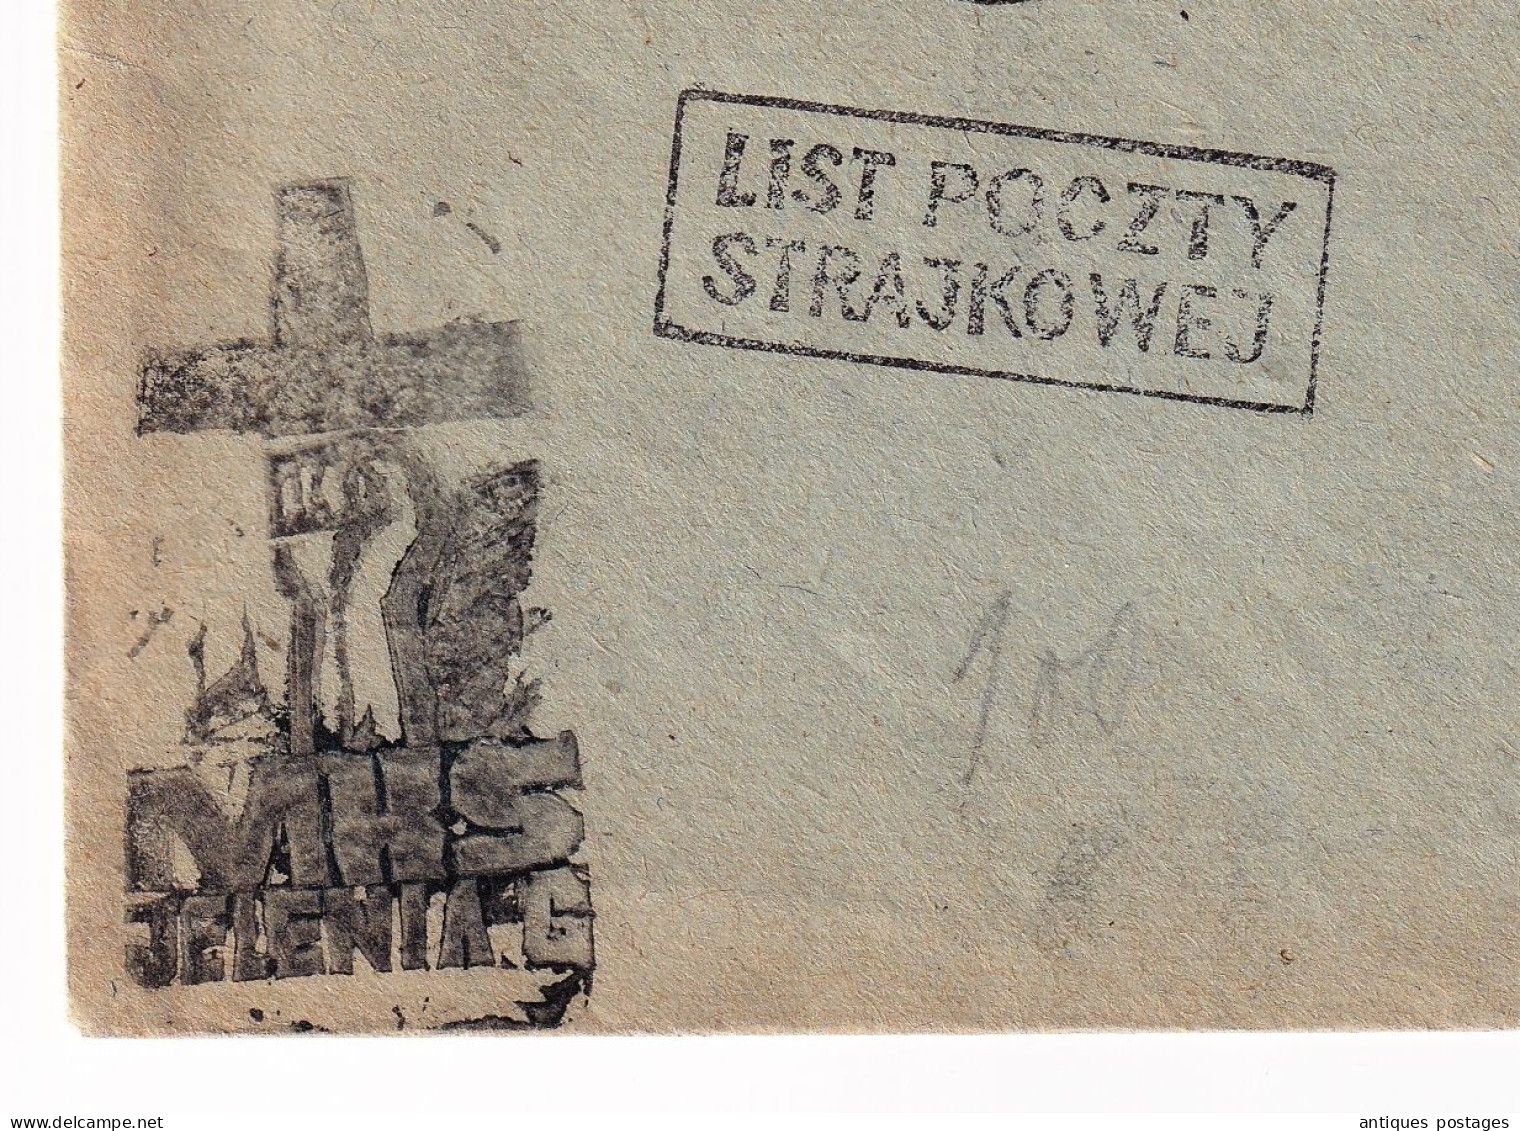 Lettre POCZTA STRAJKOWA Jelenia Góra 22 -1-1981 MKS Solidarność List Poczty Strajkowej Pologne Poland Polska - Covers & Documents